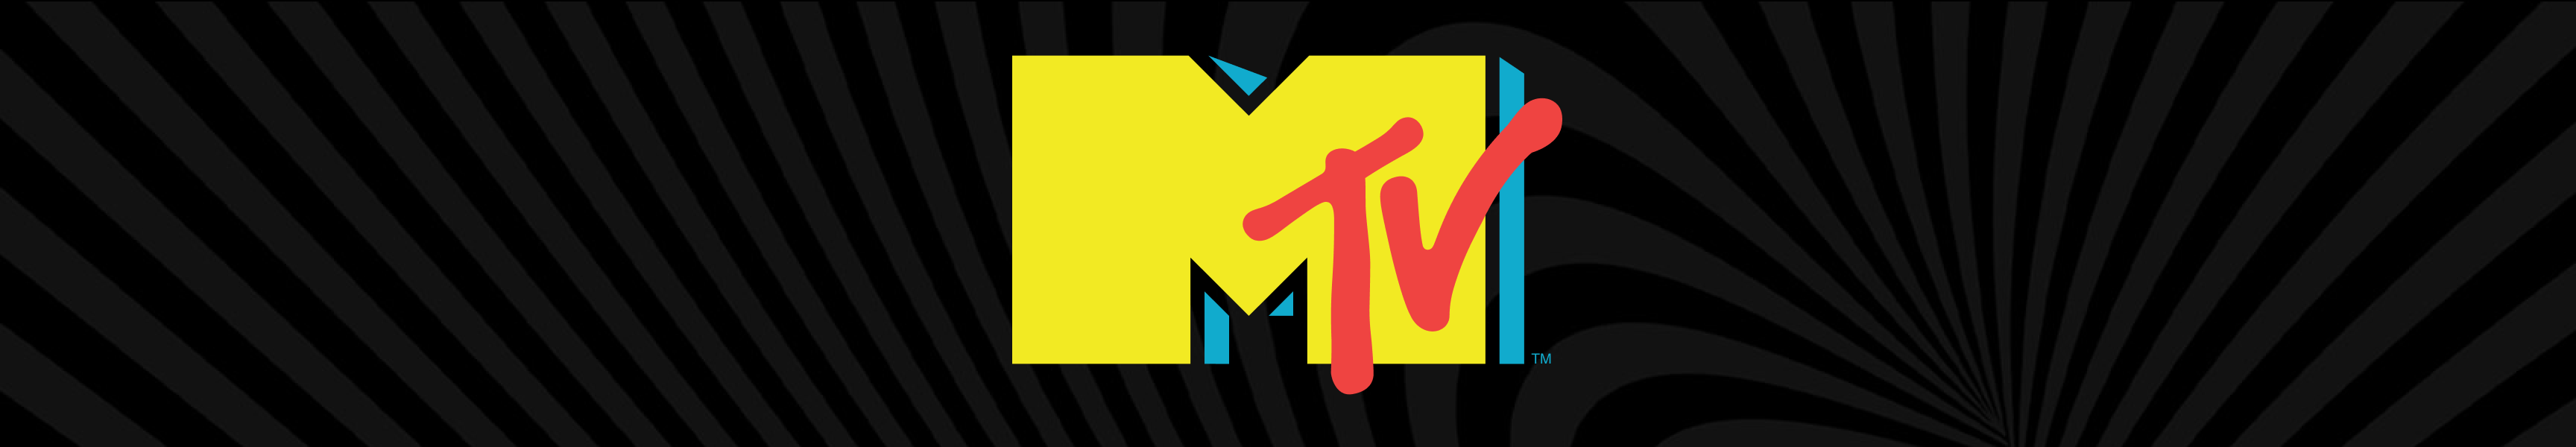 Oreillers MTV